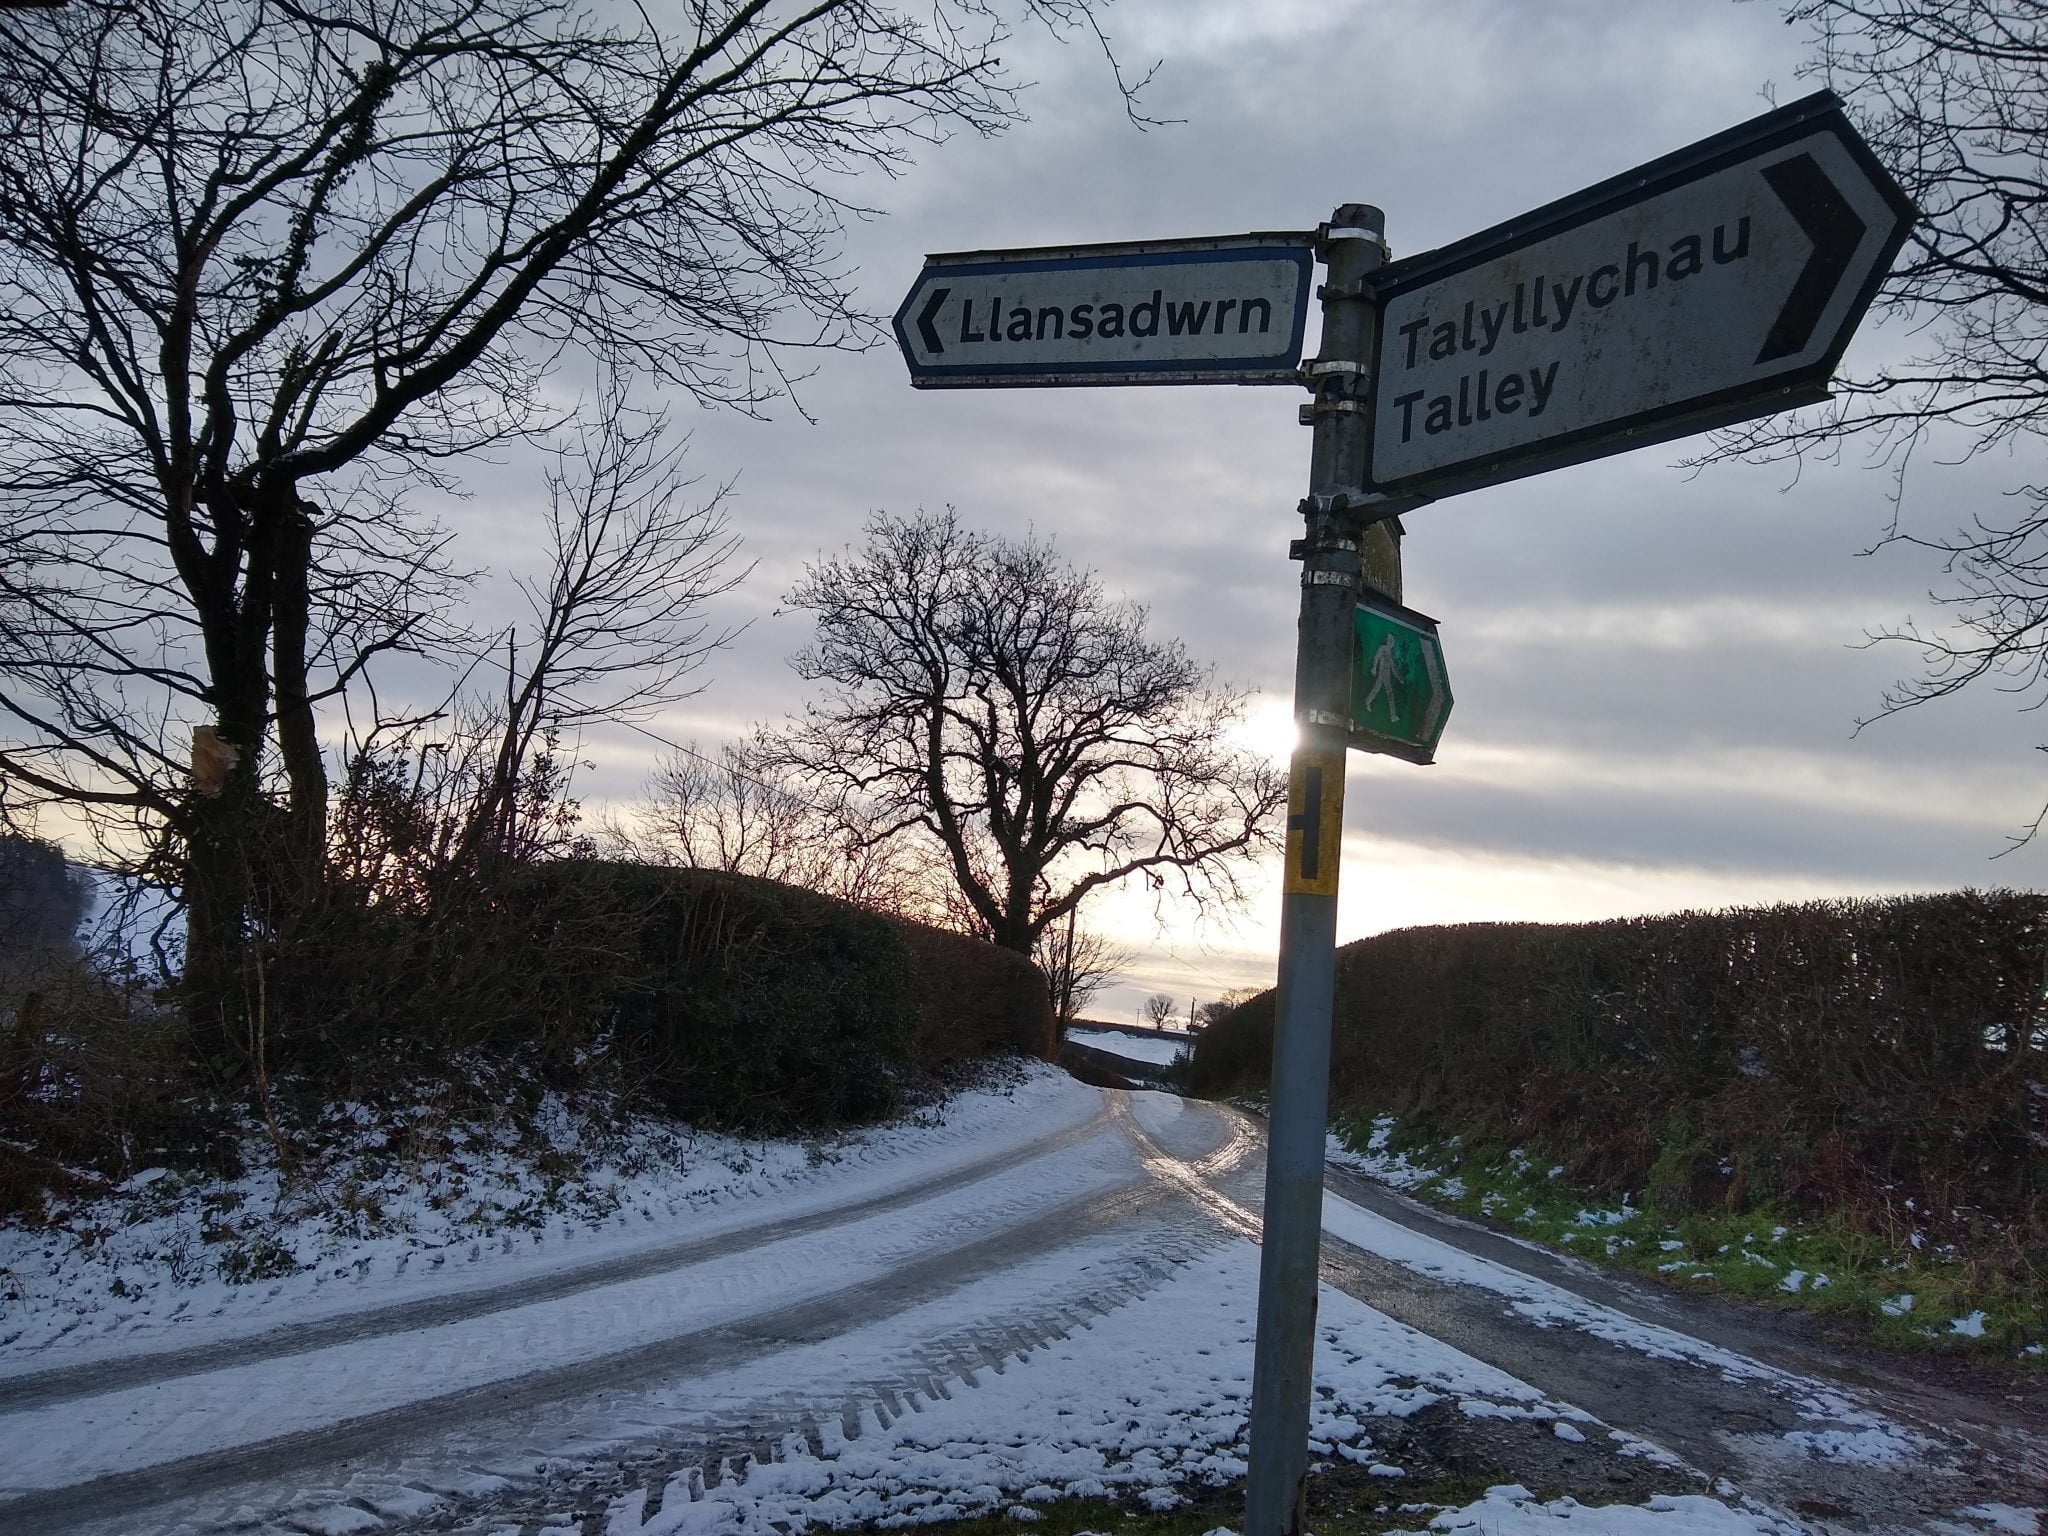 Llansadwrn/ Talley village sign in the snow